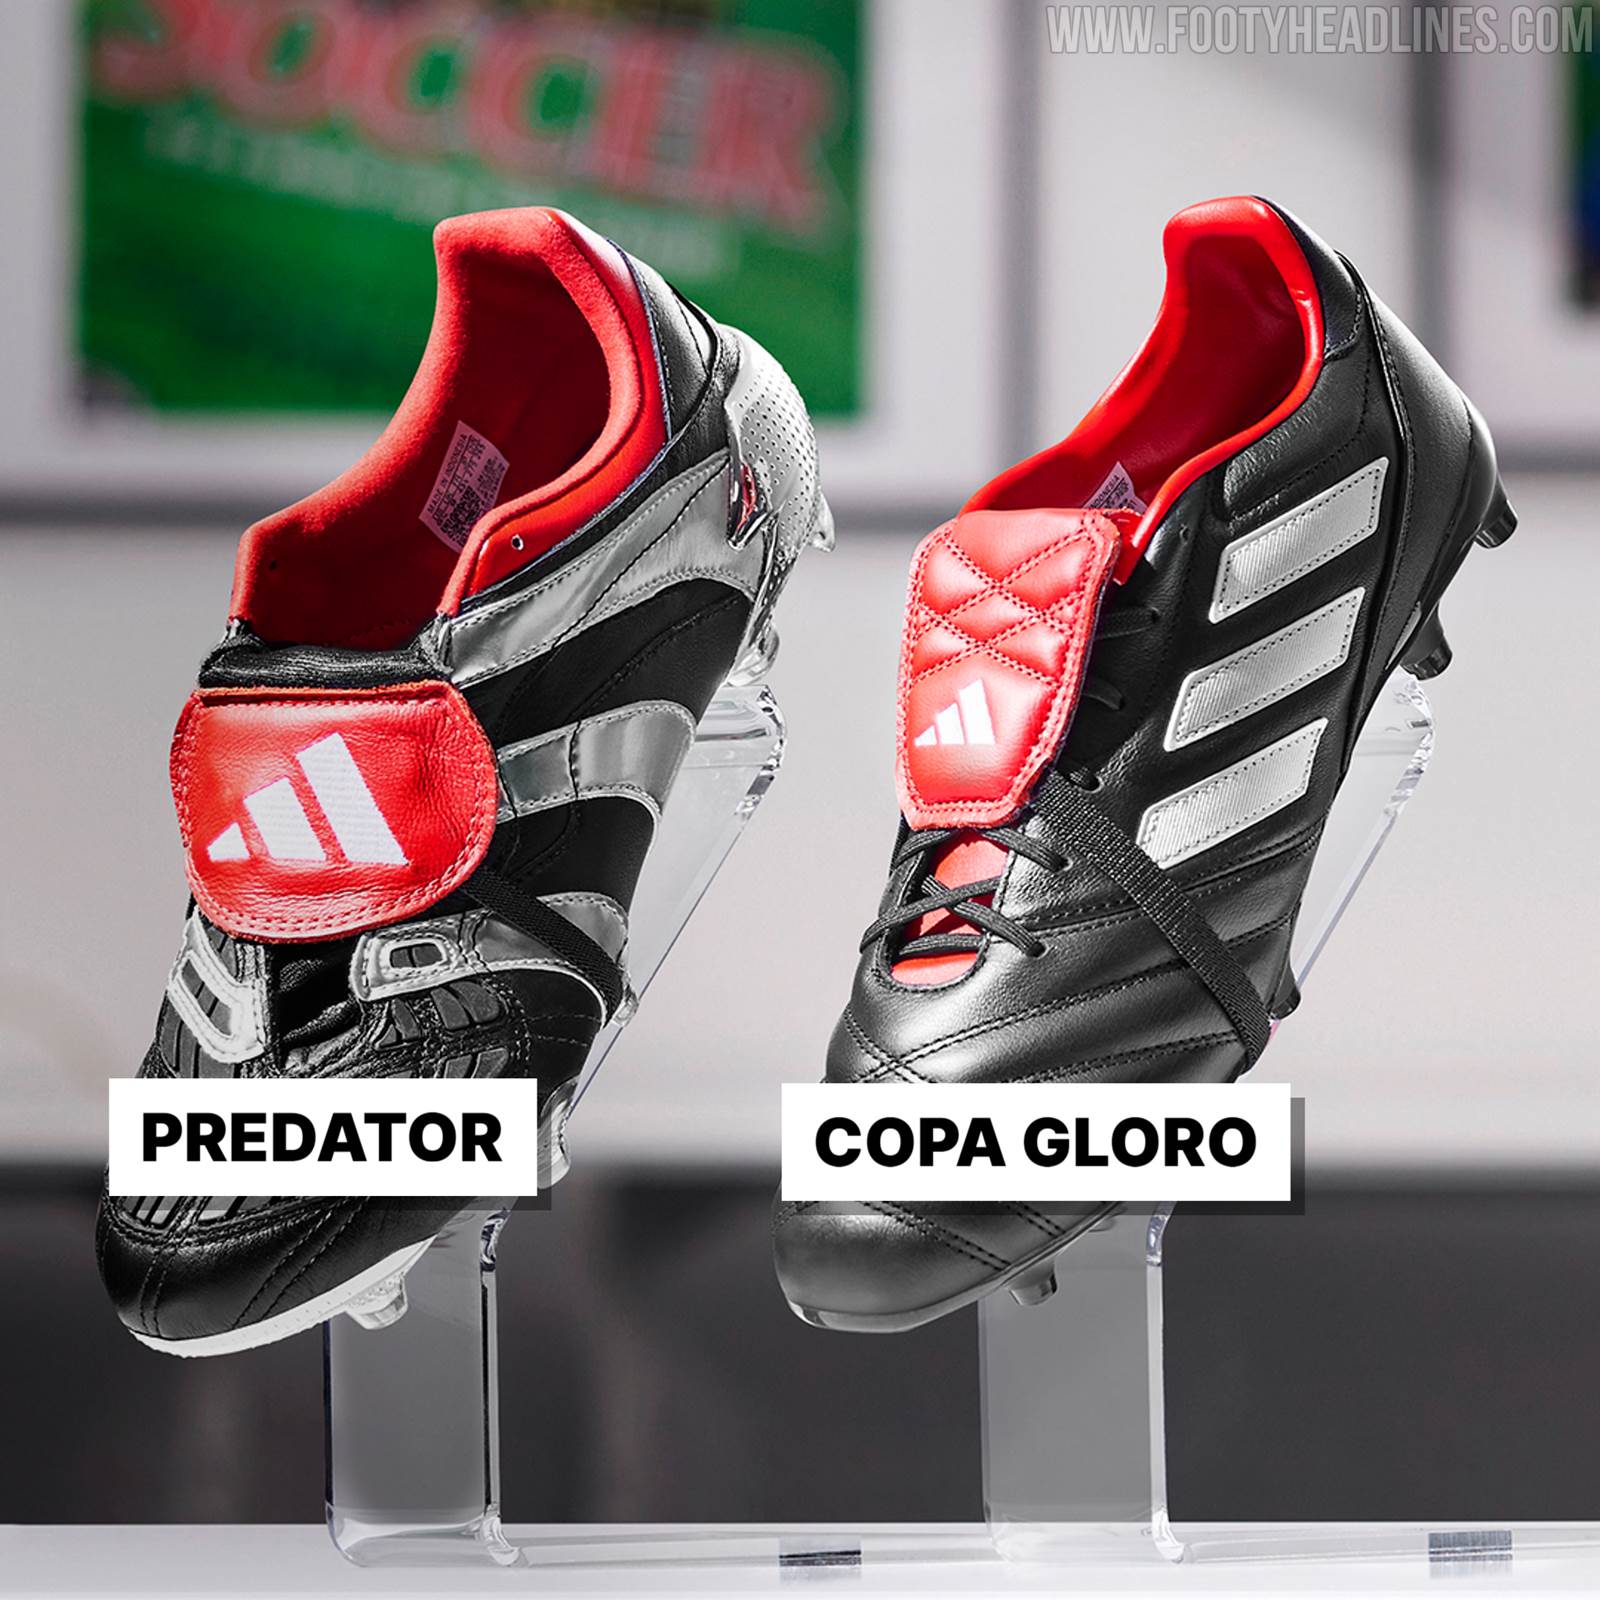 Copa Gloro 'Predator' Boots Released - Footy